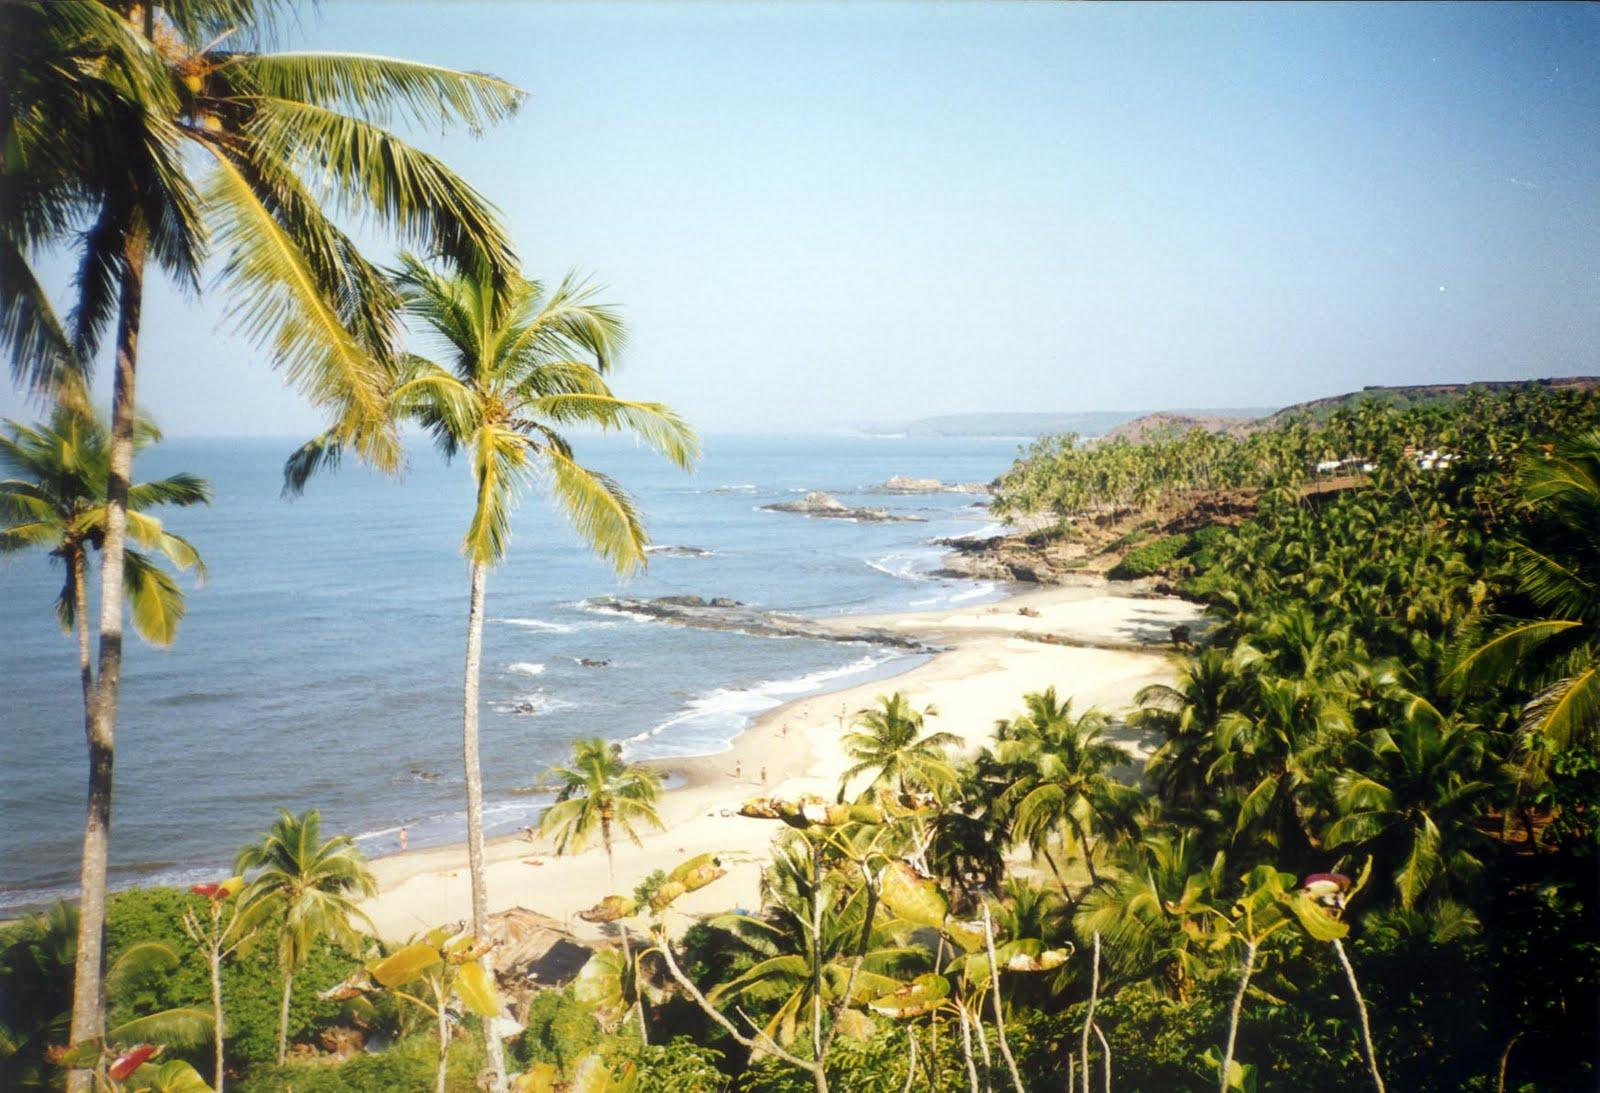 annaharper: The India Place Of Goa Beach Deskop Wallpaper & Picture, Gallary